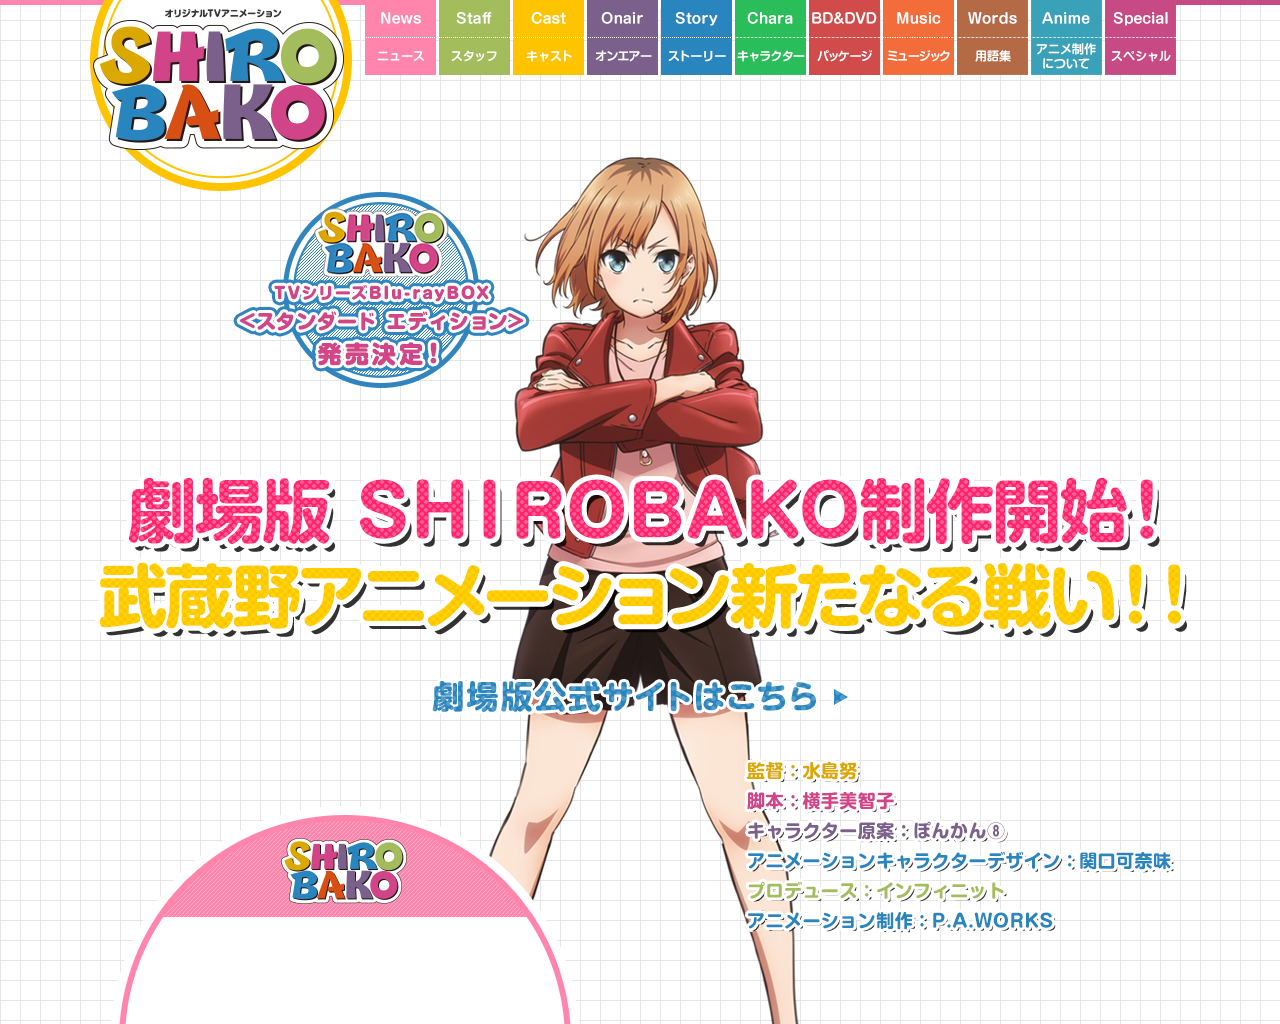 shirobako-anime.com